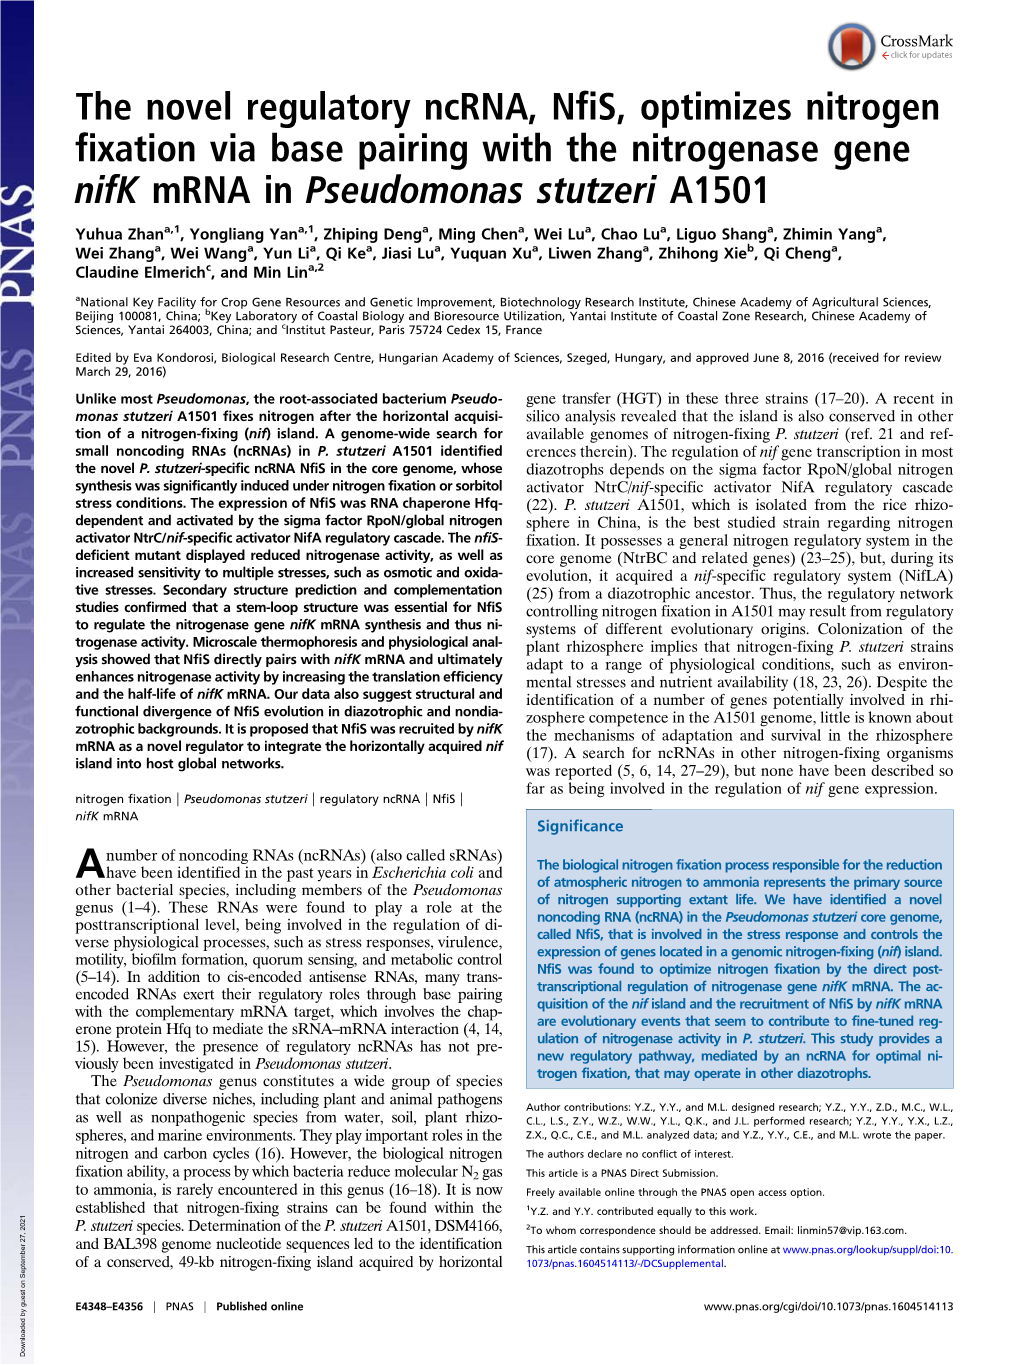 The Novel Regulatory Ncrna, Nfis, Optimizes Nitrogen Fixation Via Base Pairing with the Nitrogenase Gene Nifk Mrna in Pseudomonas Stutzeri A1501